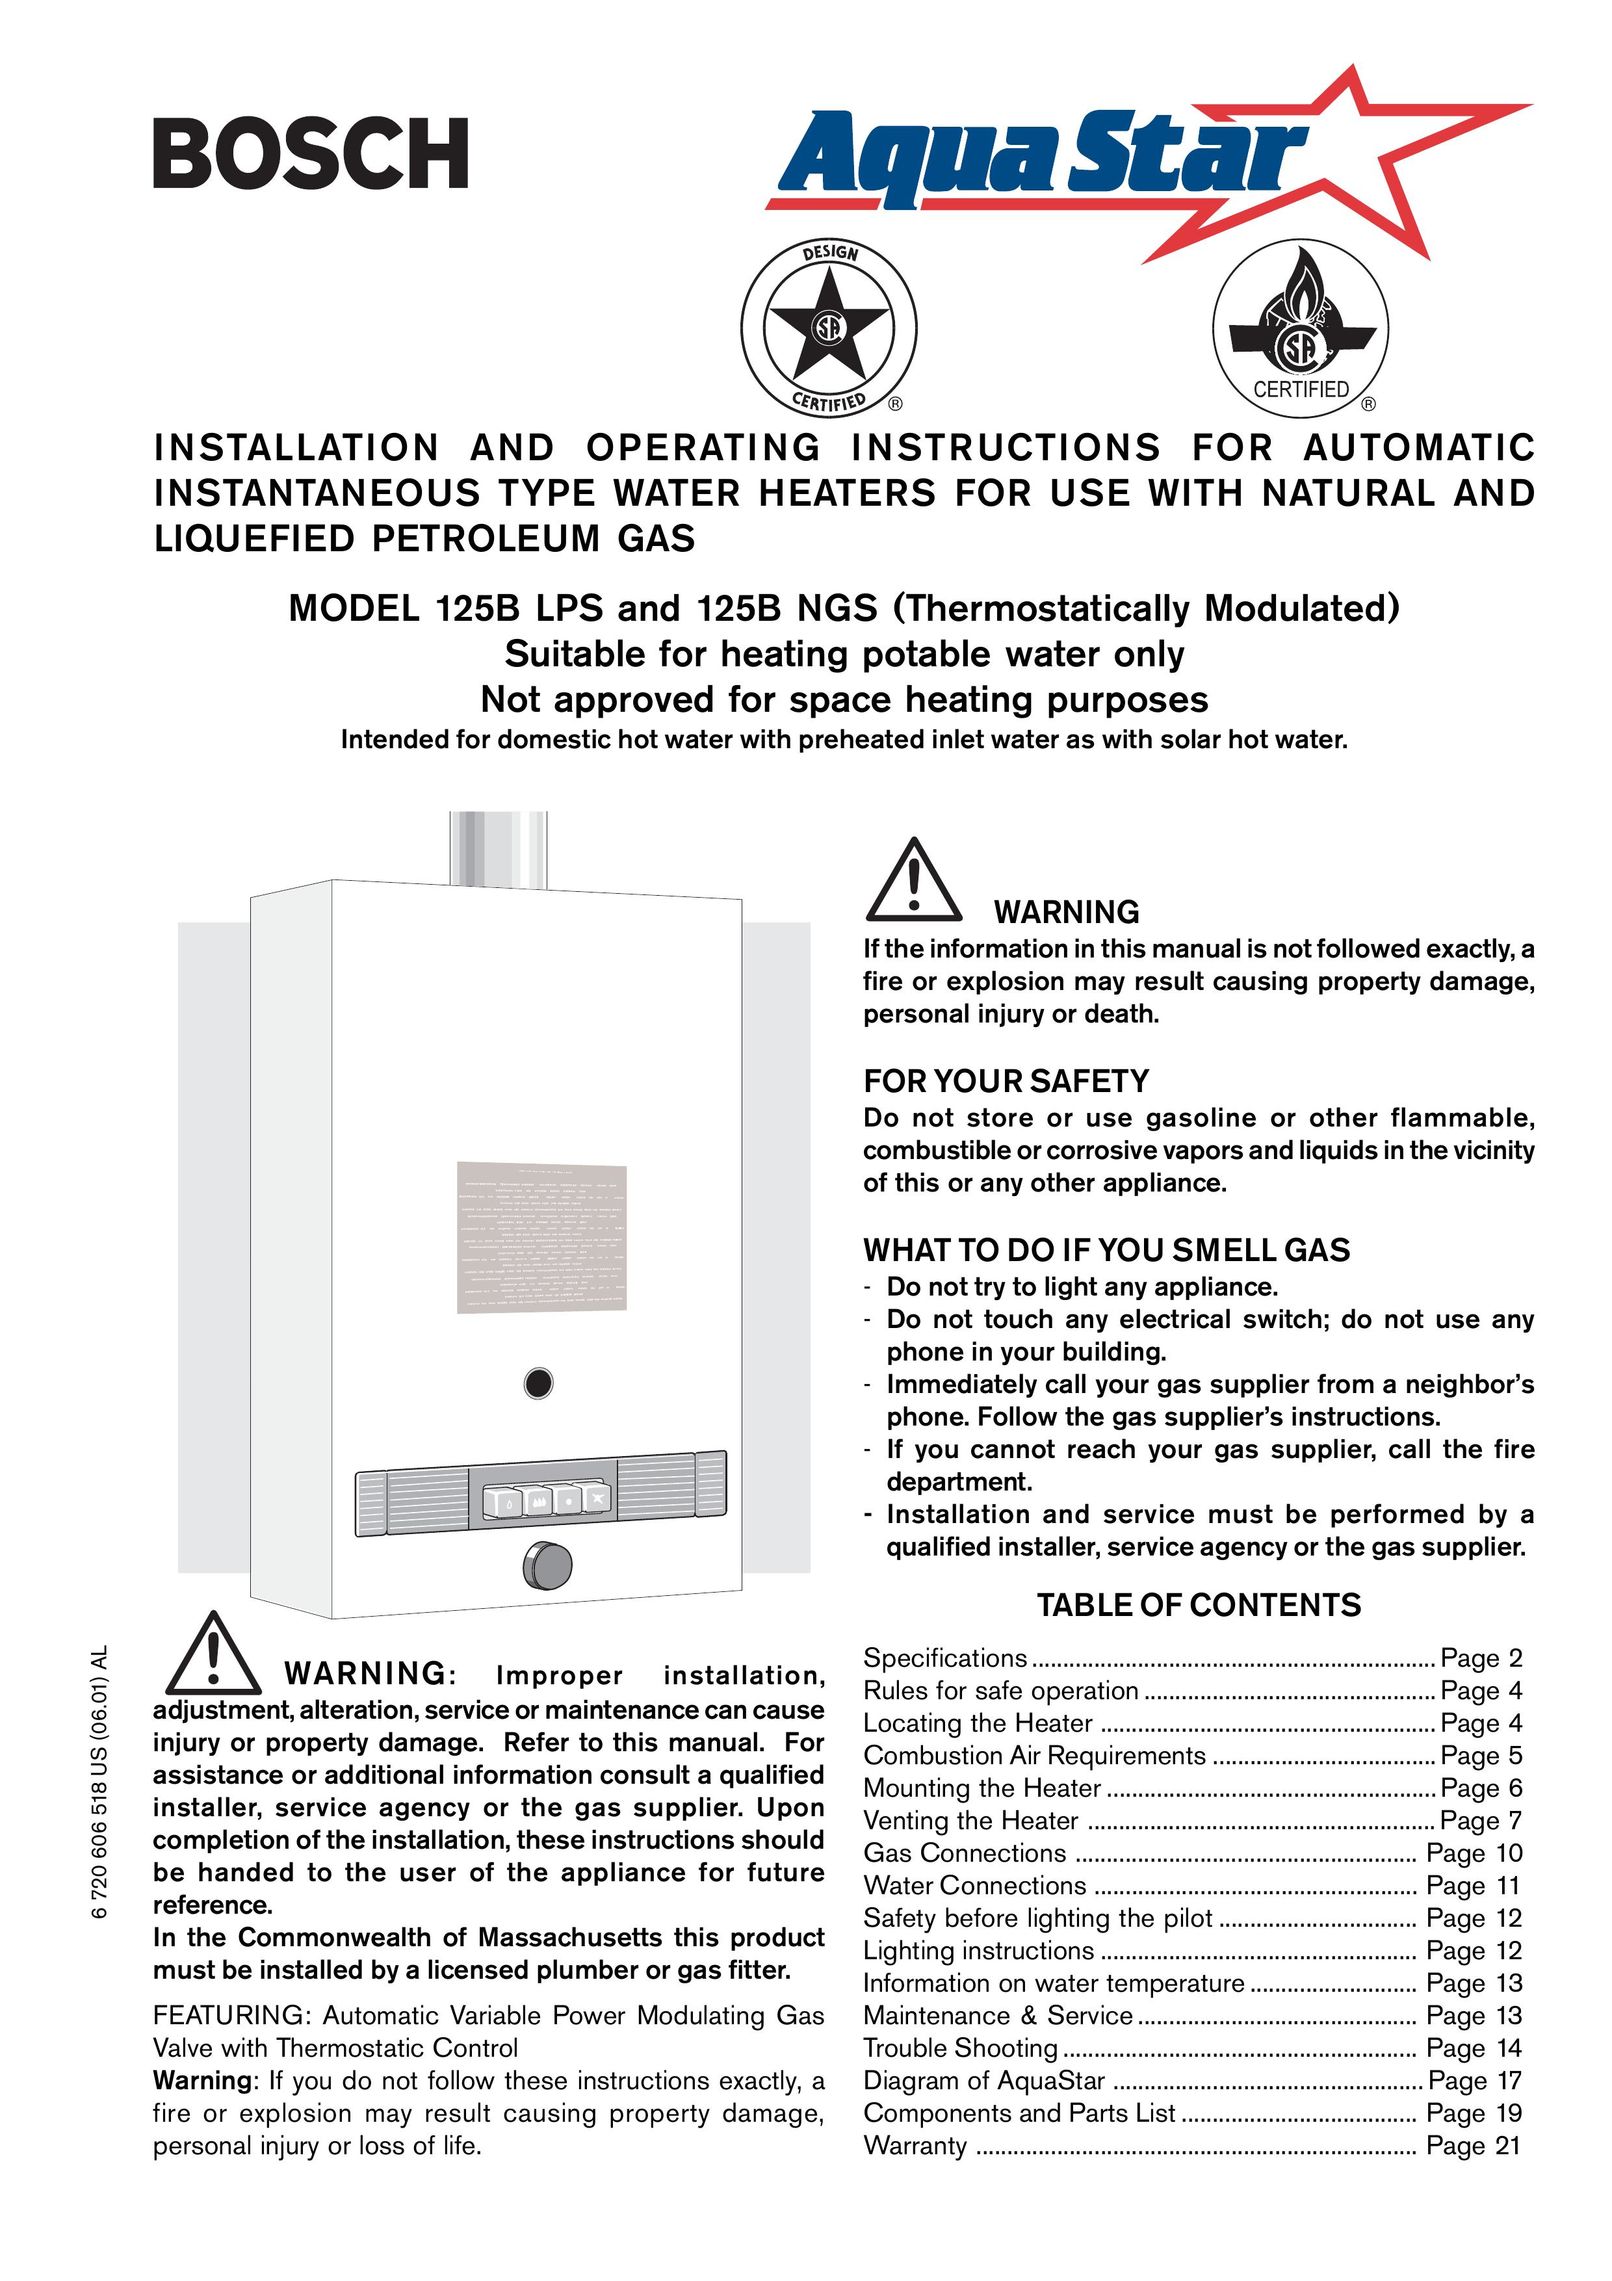 AquaStar 125B LPS Water Heater User Manual